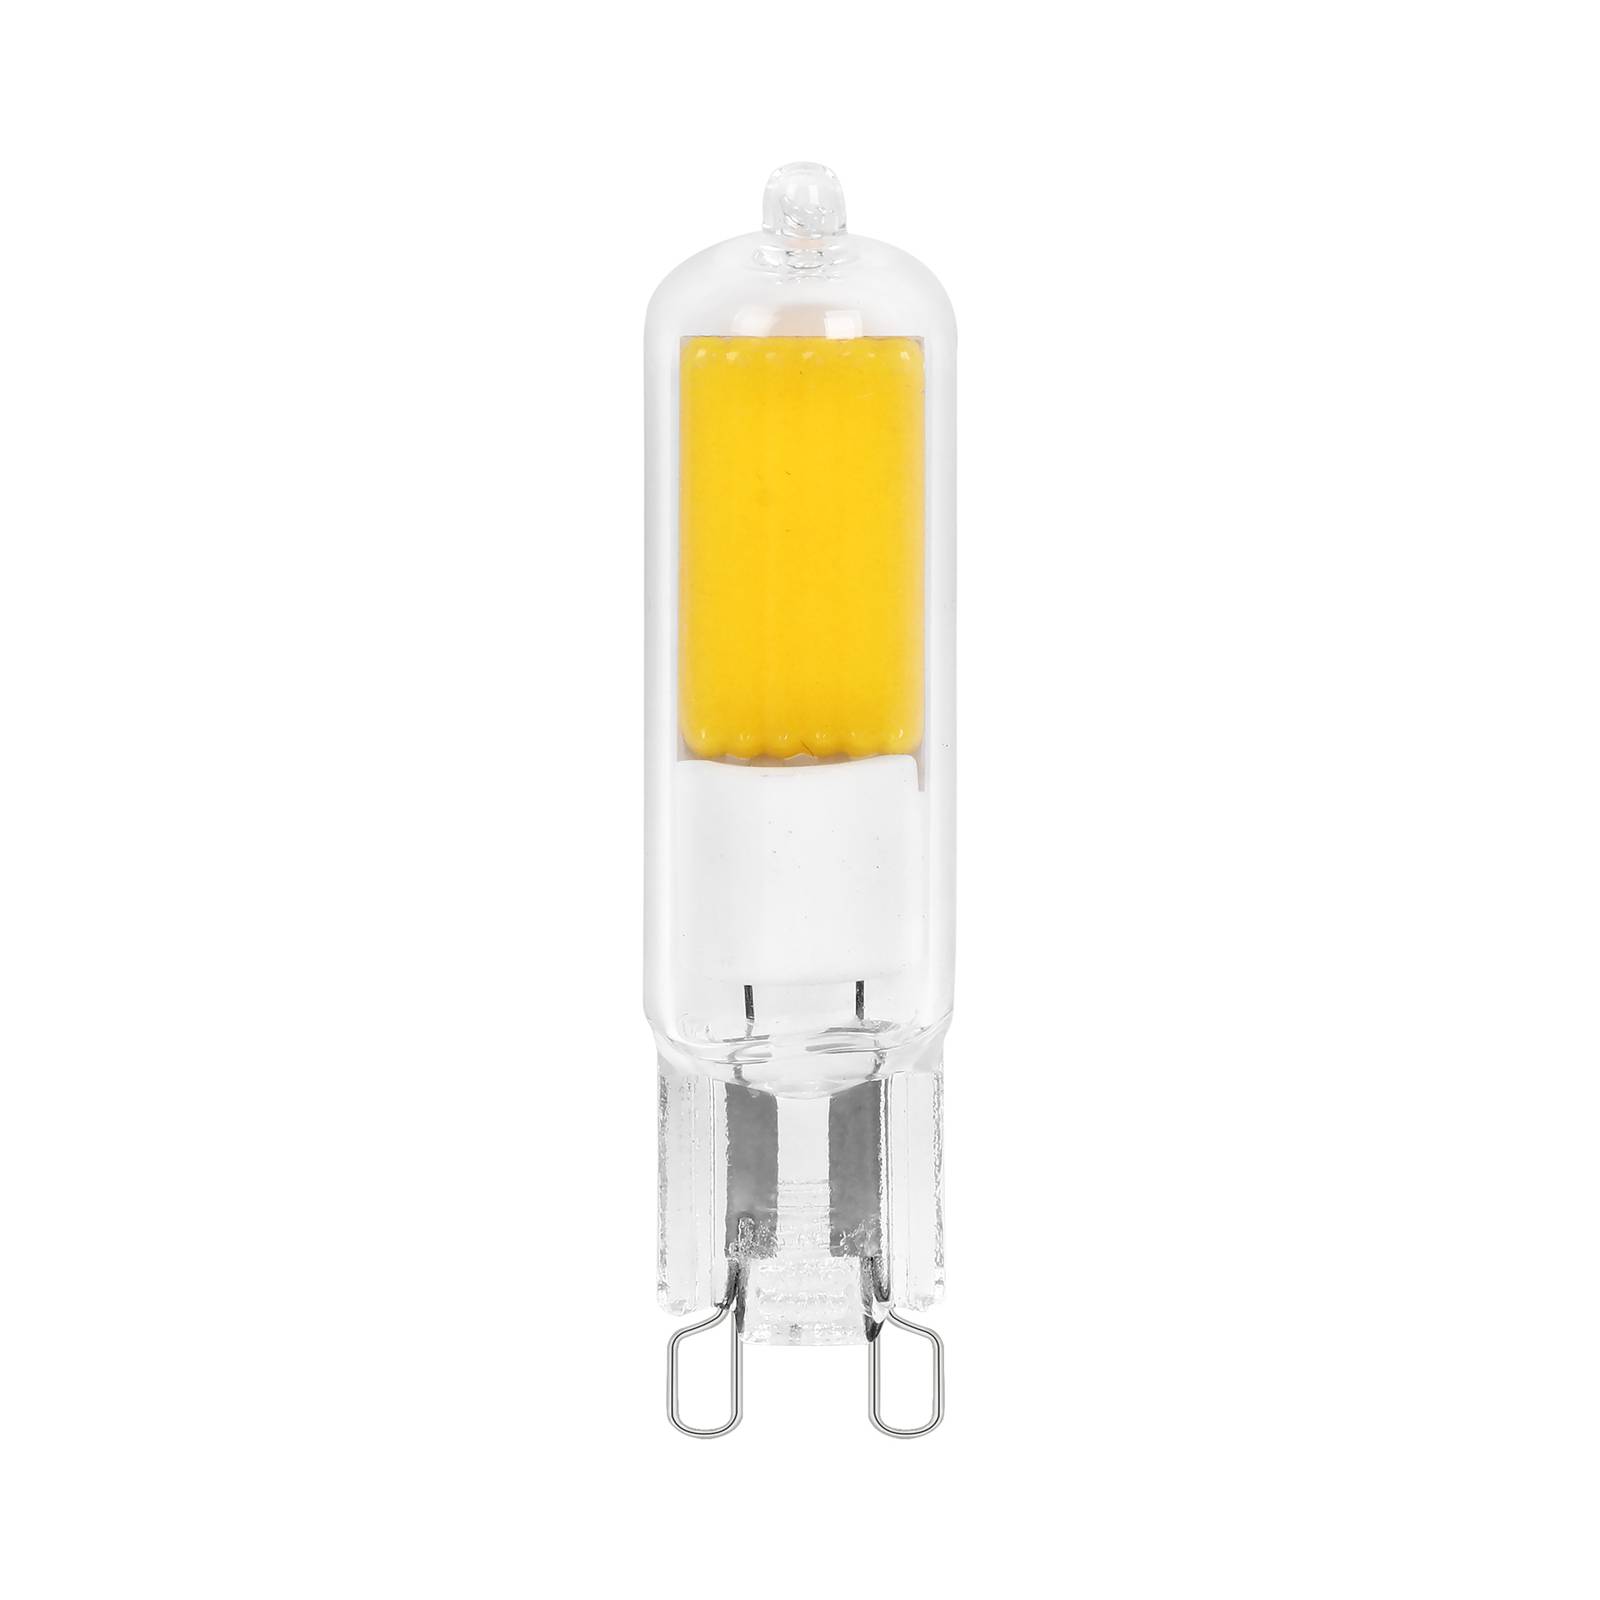 Image of Arcchio G9 LED lampadina con attacco a spina 4W 2700K 470lm